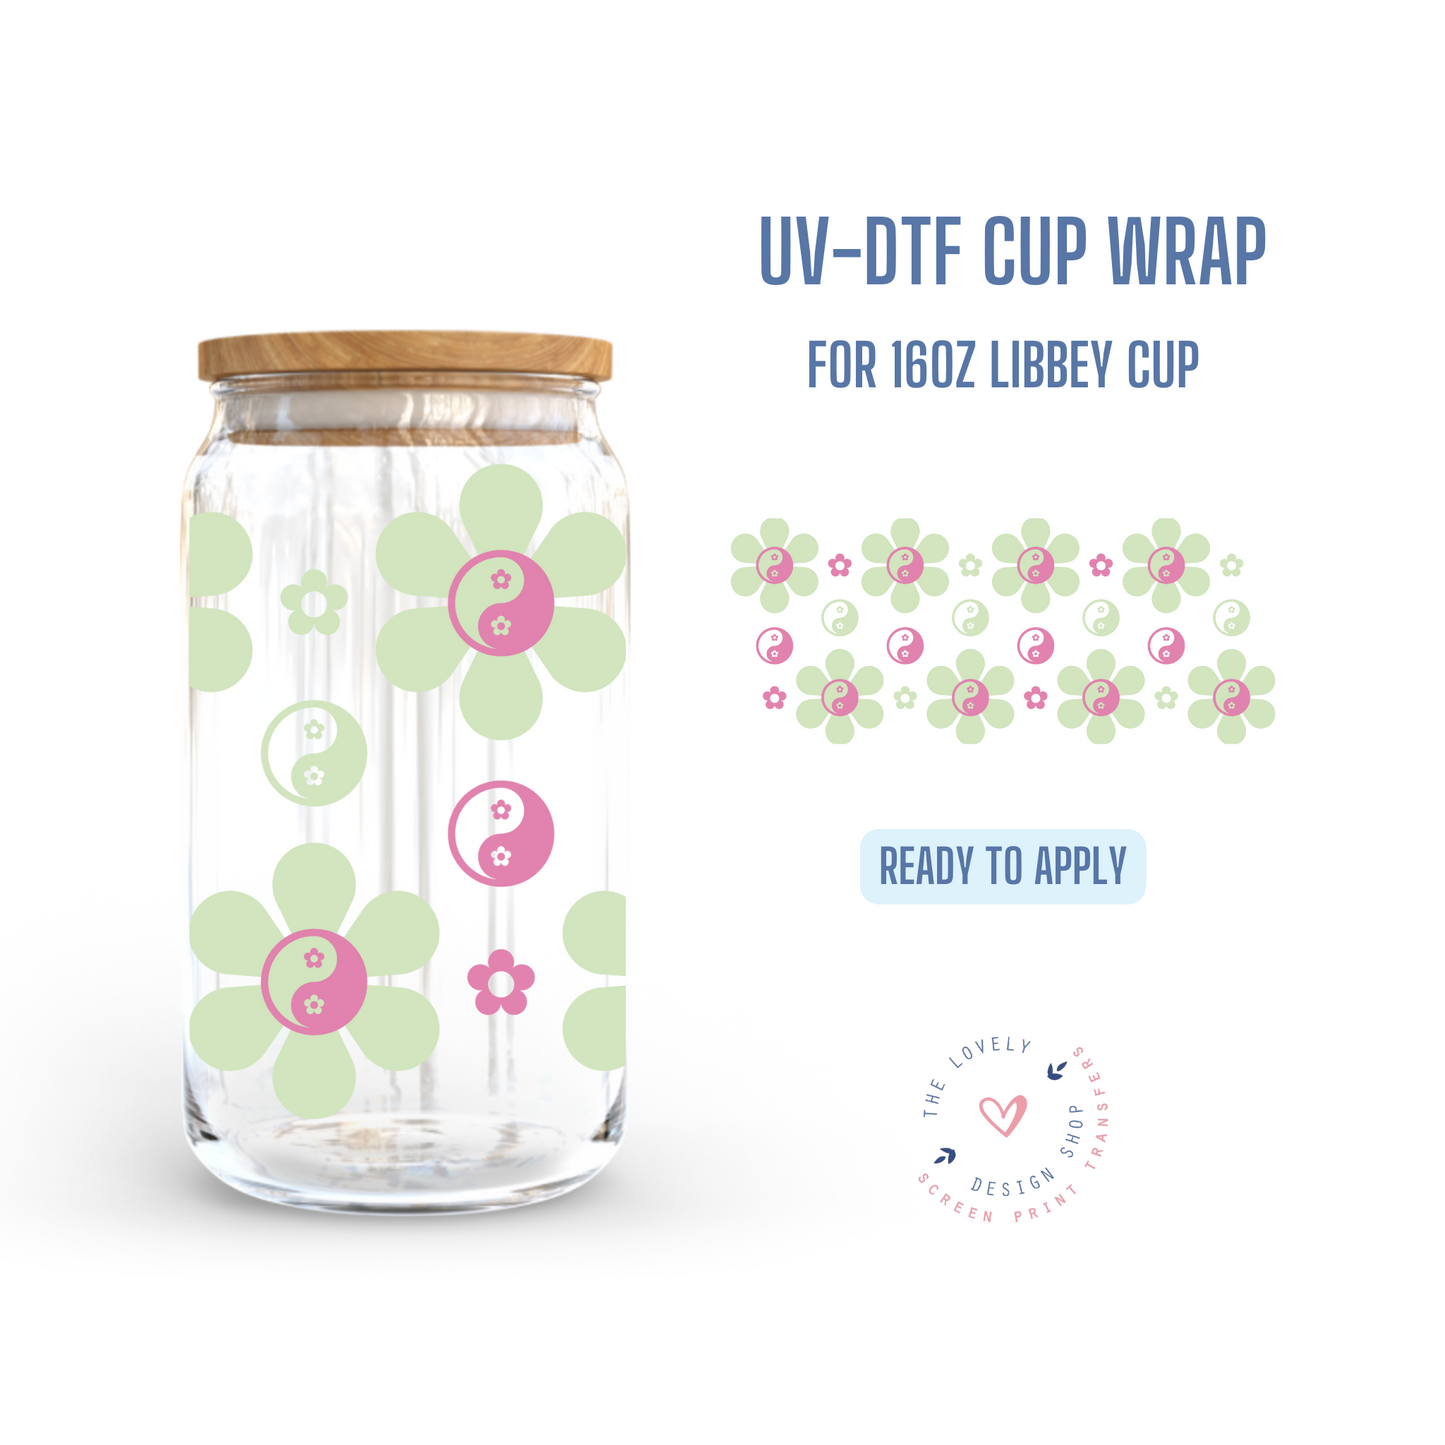 Mint Yin Yang Flowers - UV DTF 16 oz Libbey Cup Wrap (Ready to Ship) Feb 27